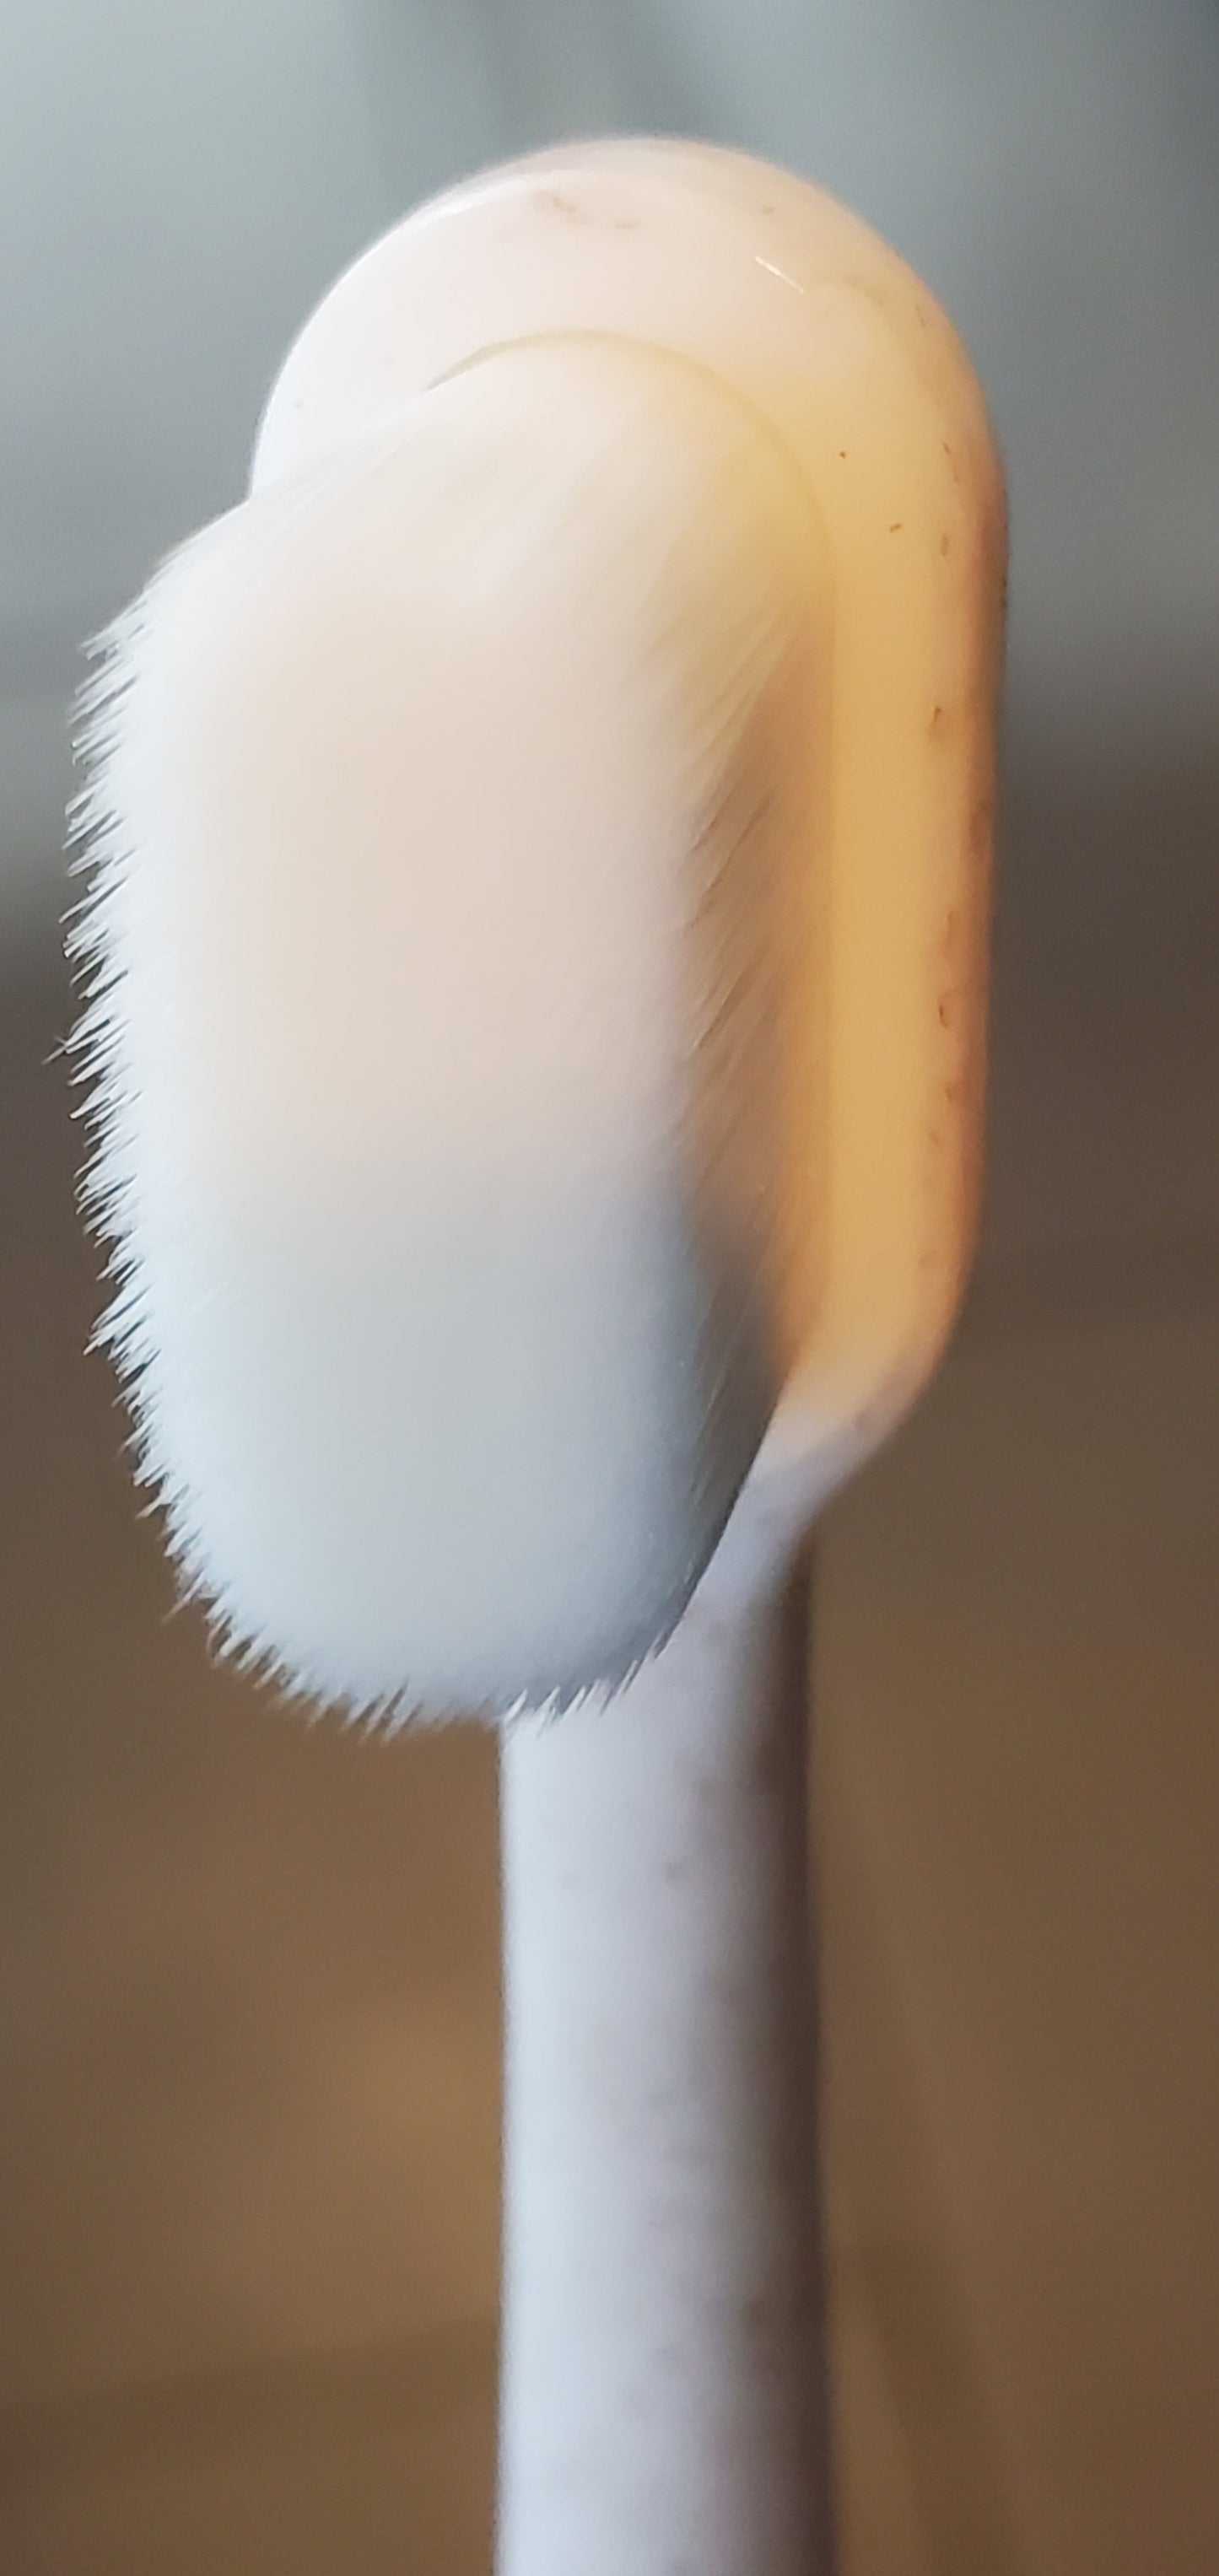 Puppy Polisher Eco Toothbrush (Regular size)